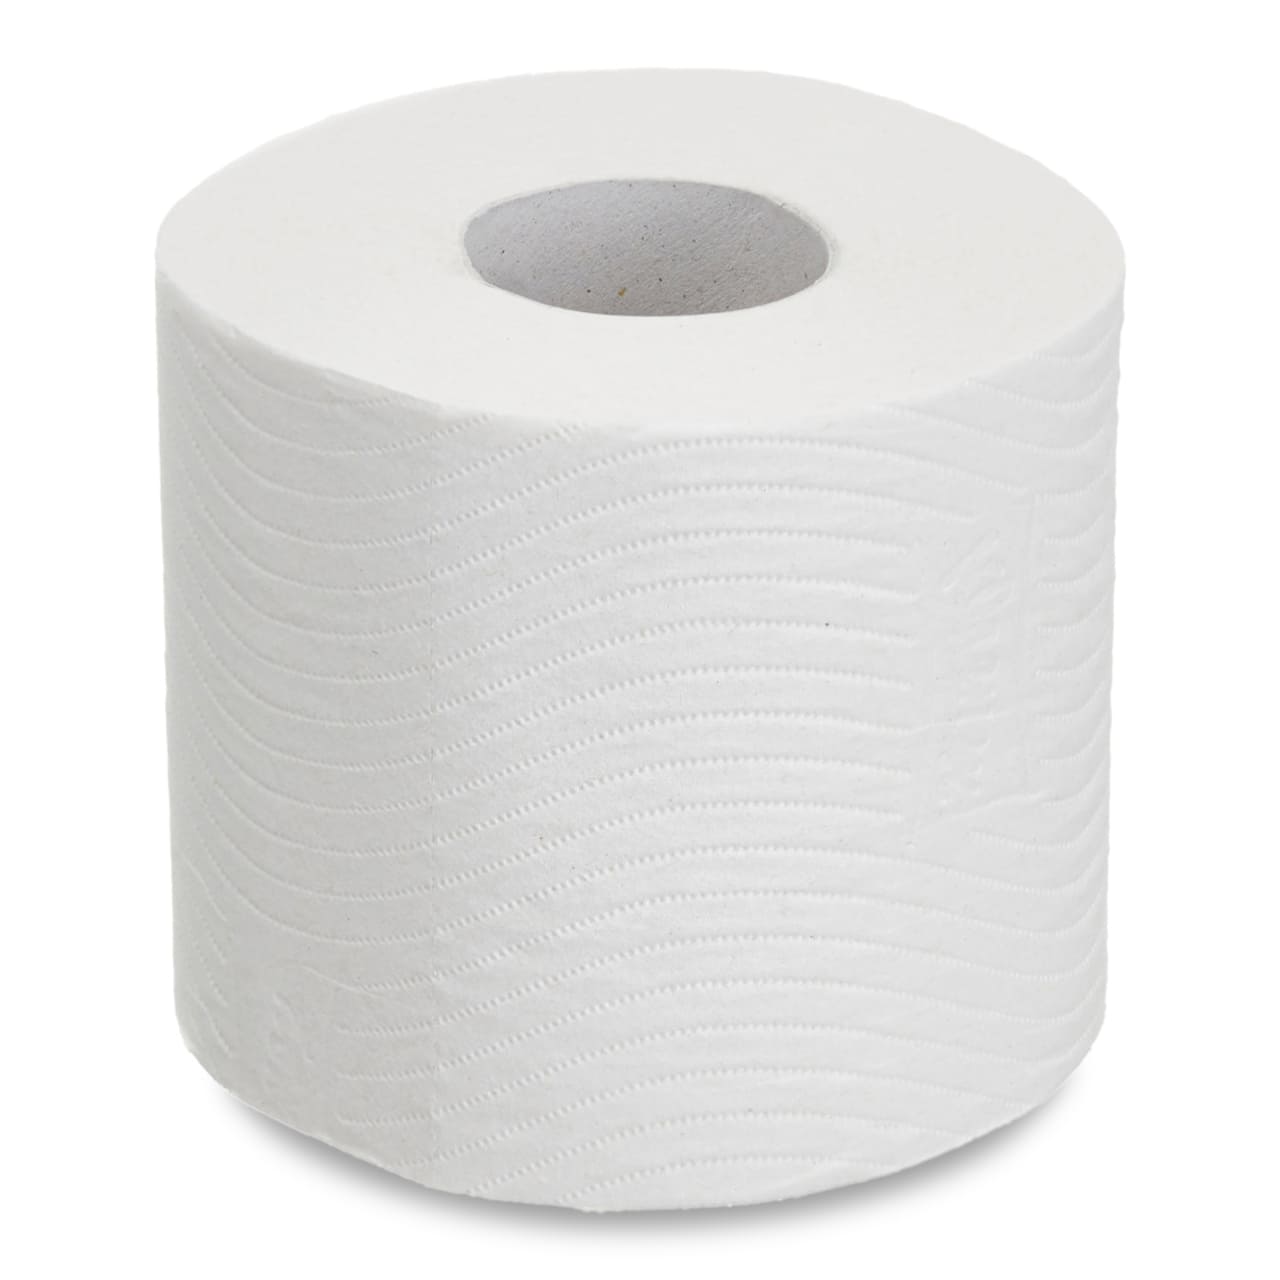 Papier toilette pure blanc 3 plis 56 Rlx*